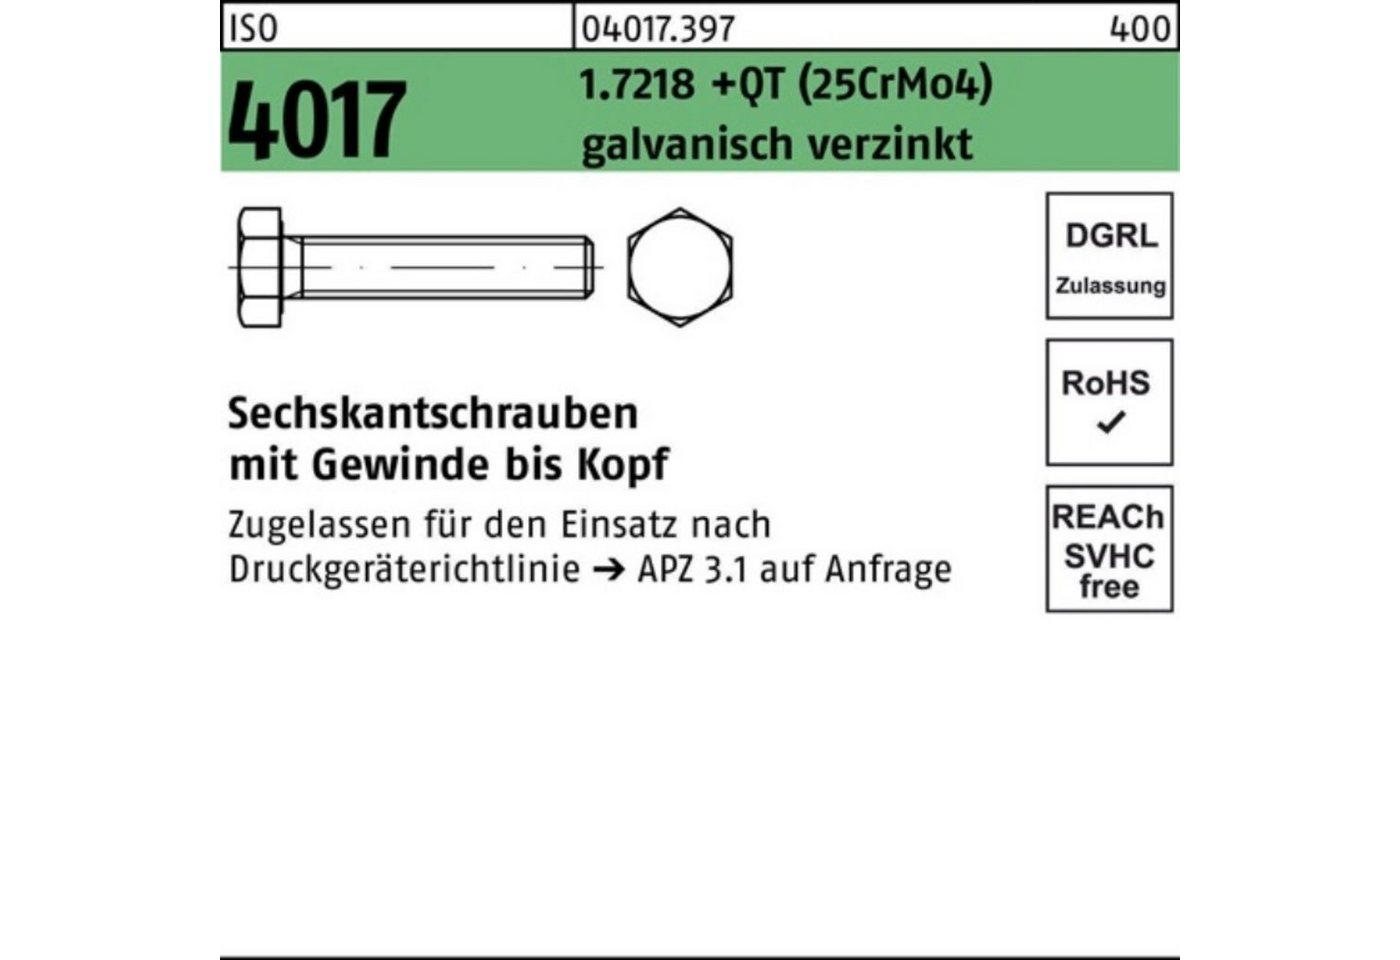 Bufab Sechskantschraube 100er Pack Sechskantschraube ISO 4017 VG M30x75 1.7218 +QT (25CrMo4) g von Bufab